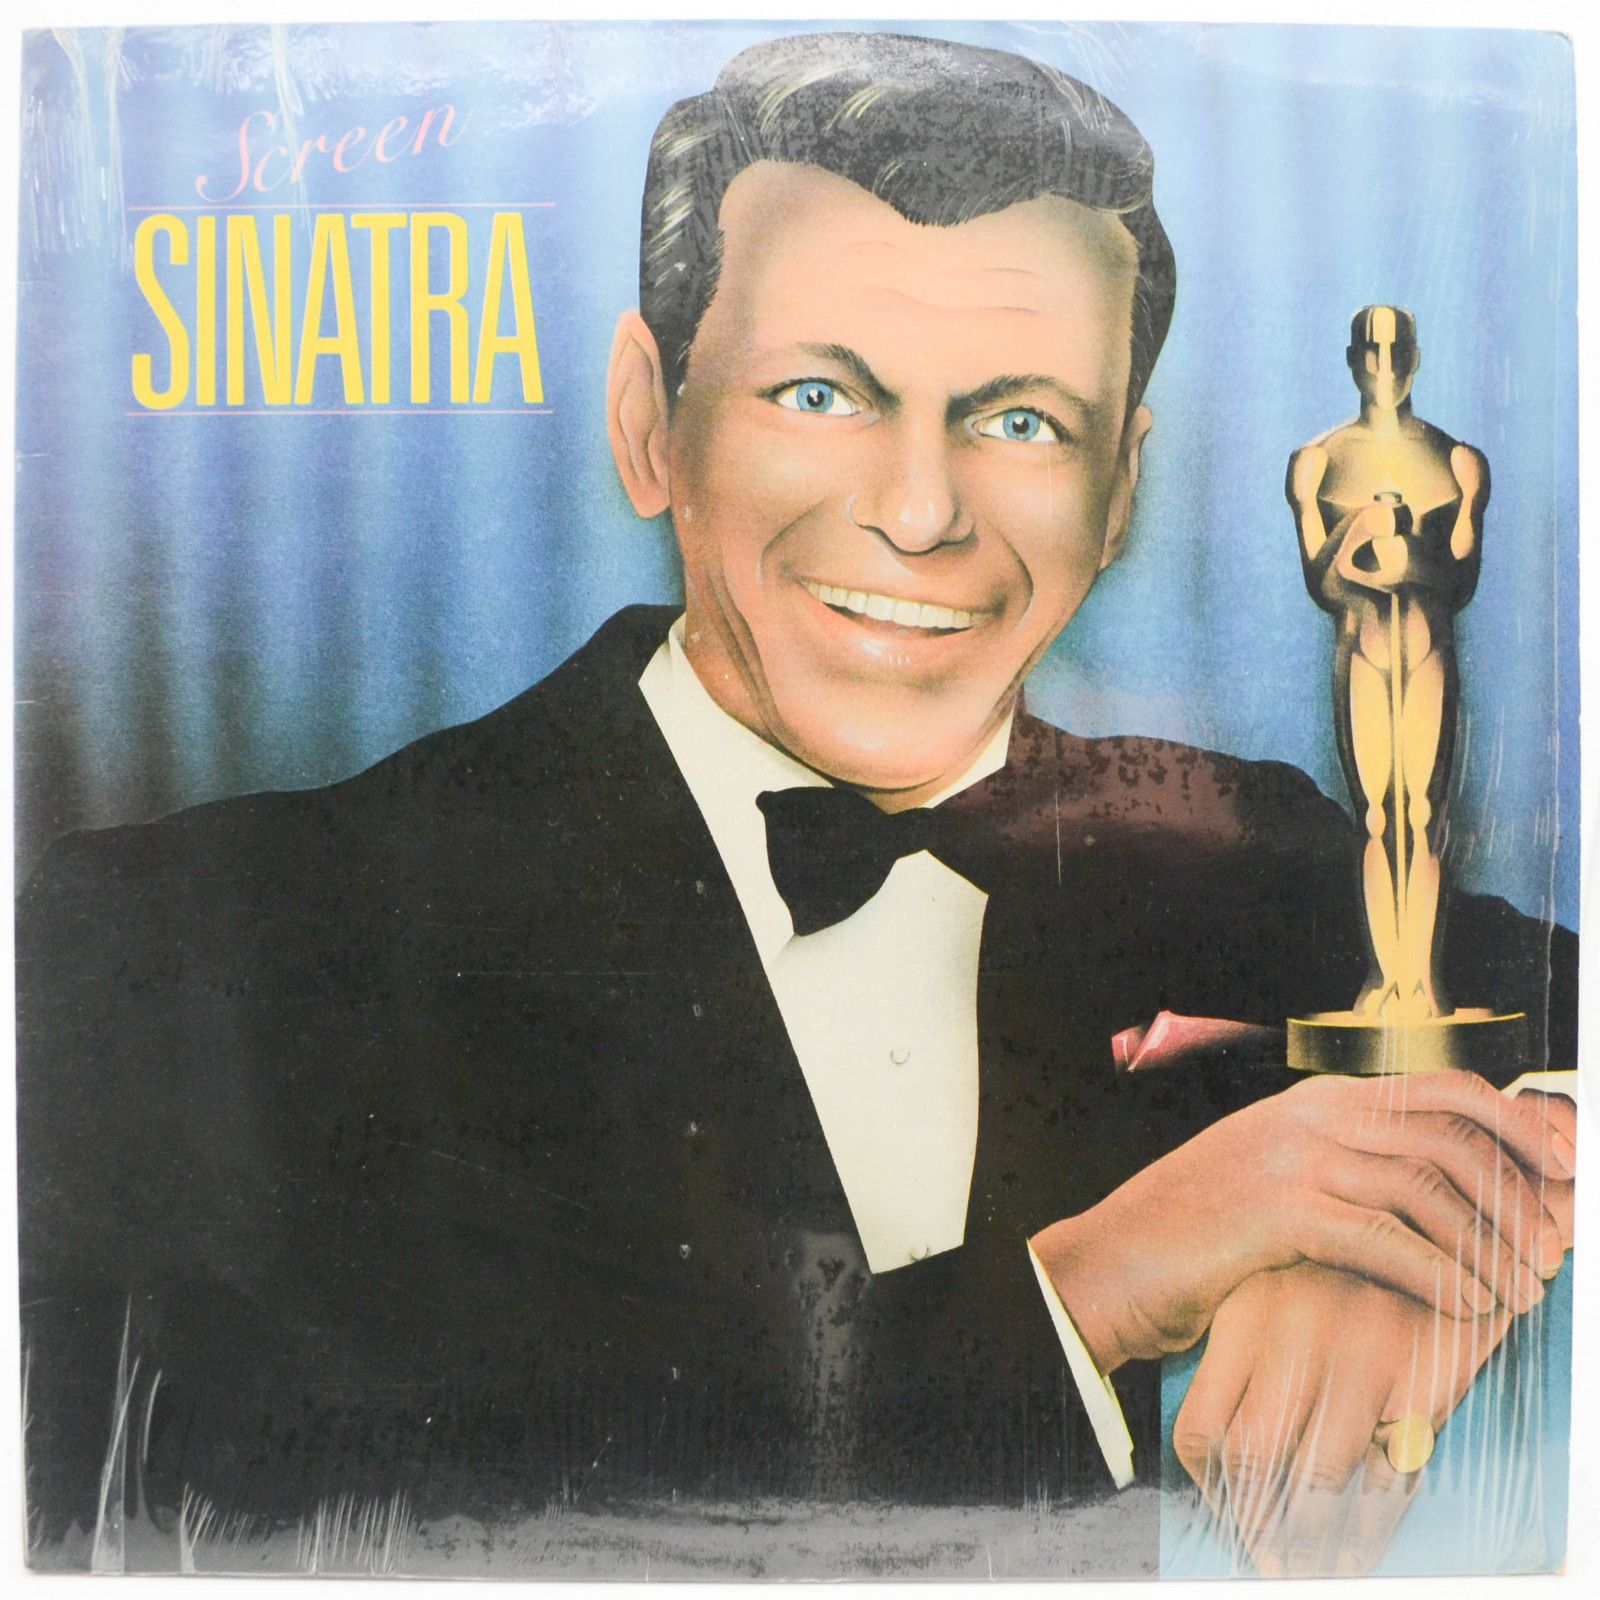 Frank Sinatra — Screen Sinatra (UK), 1980